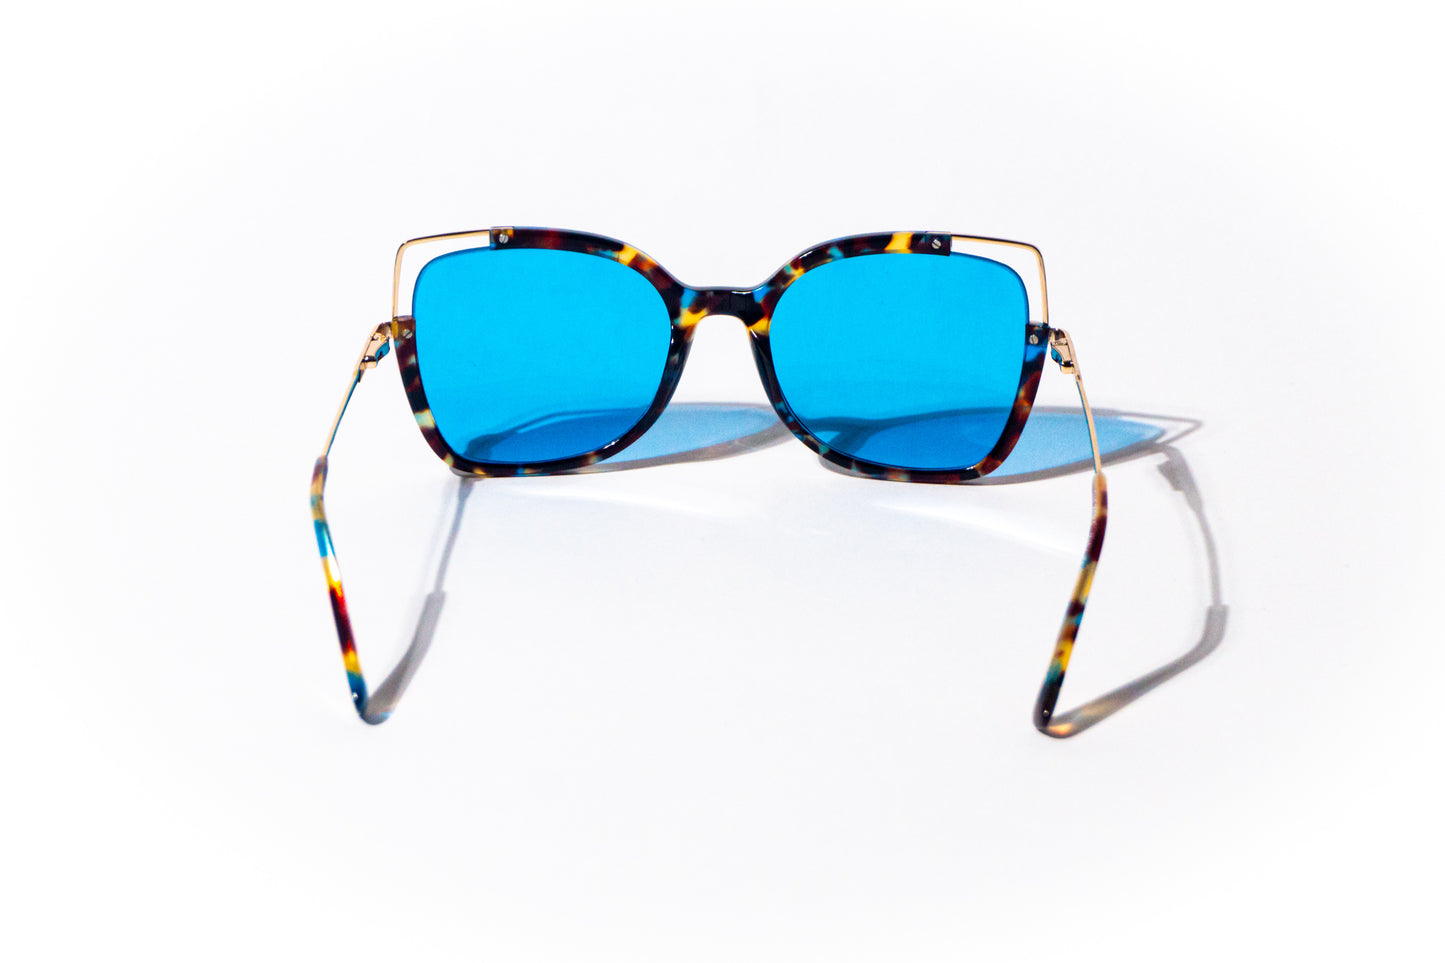 OP Limited Edition Blue Sunglasses - Edición Limitada lentes de sol azul con dorado